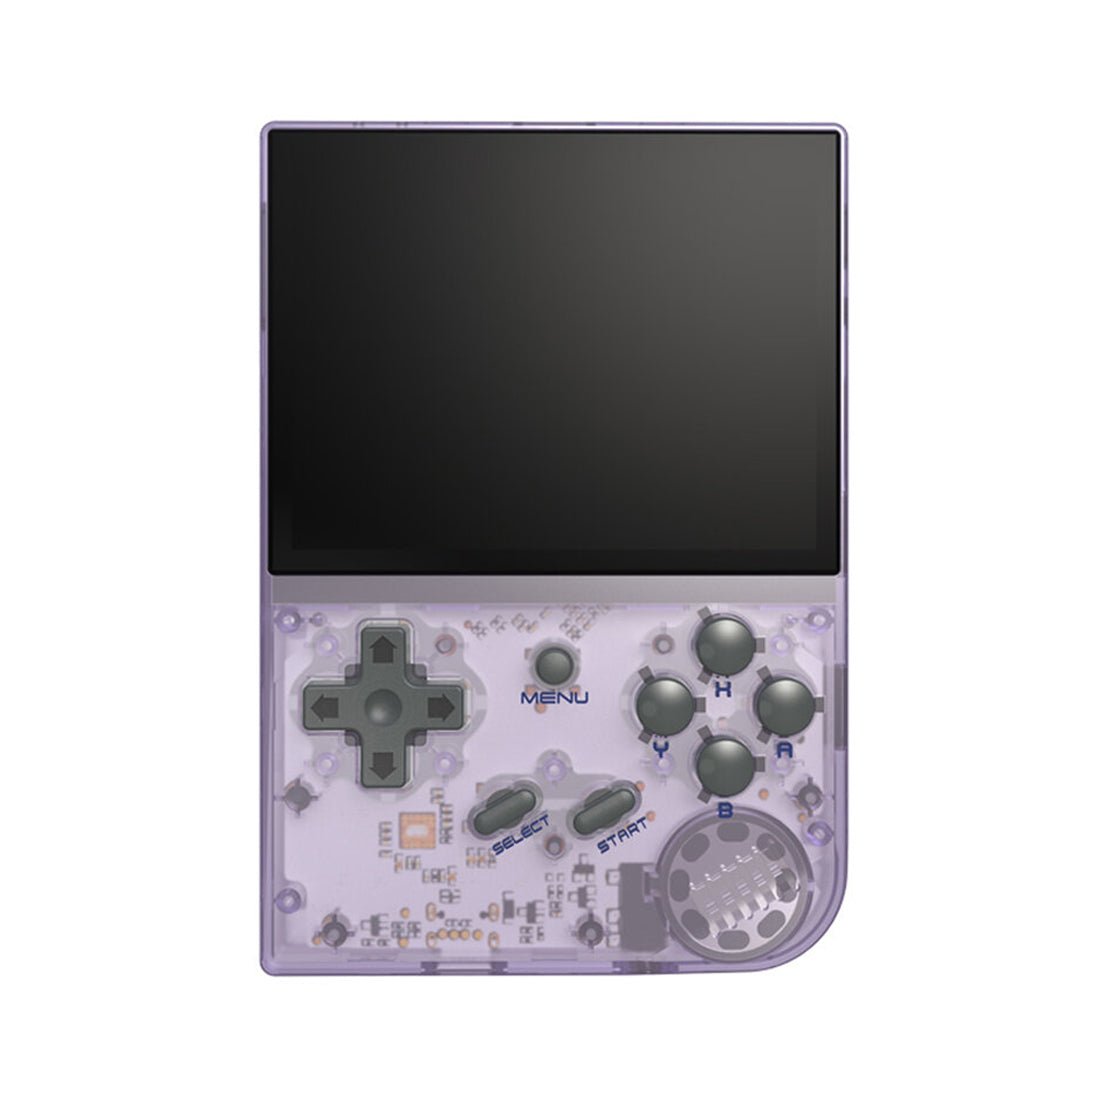 Anbernic RG35XX Handheld Gaming Console - Transparent Purple - جهاز ألعاب - Store 974 | ستور ٩٧٤